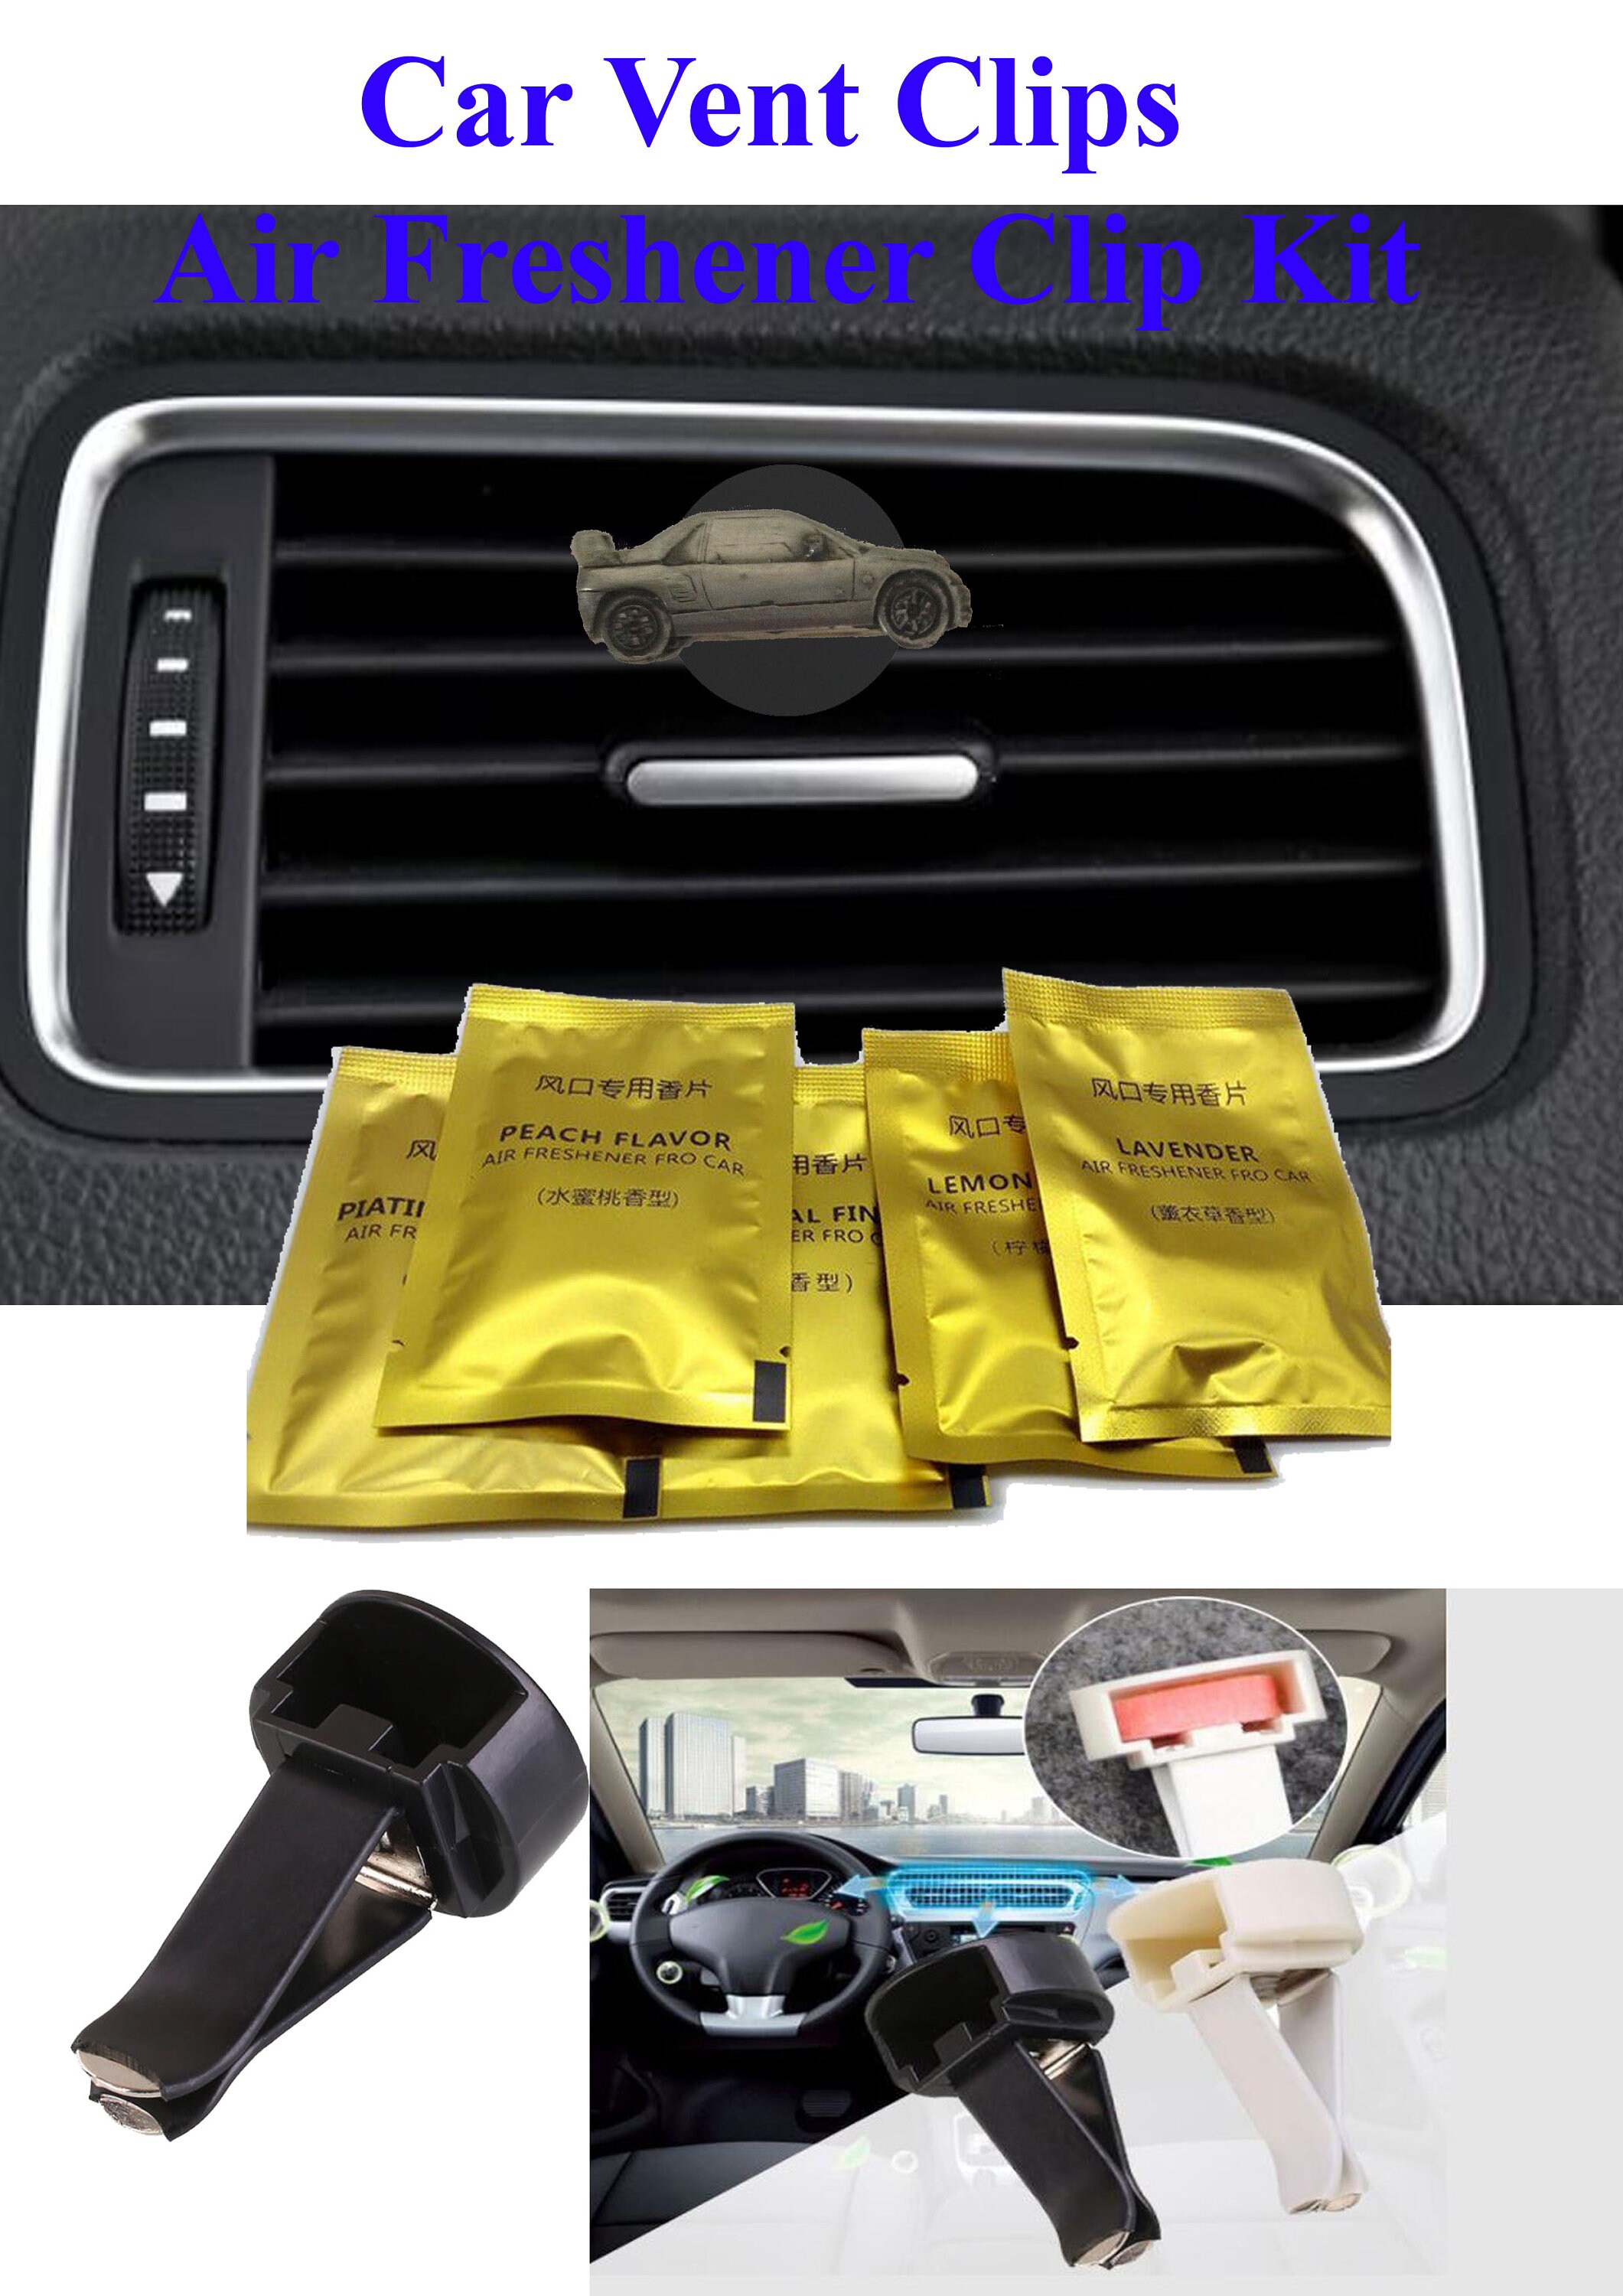 Japan Classic Car AZ-1 Air Freshener Vent Clip Kit Decoration Fits